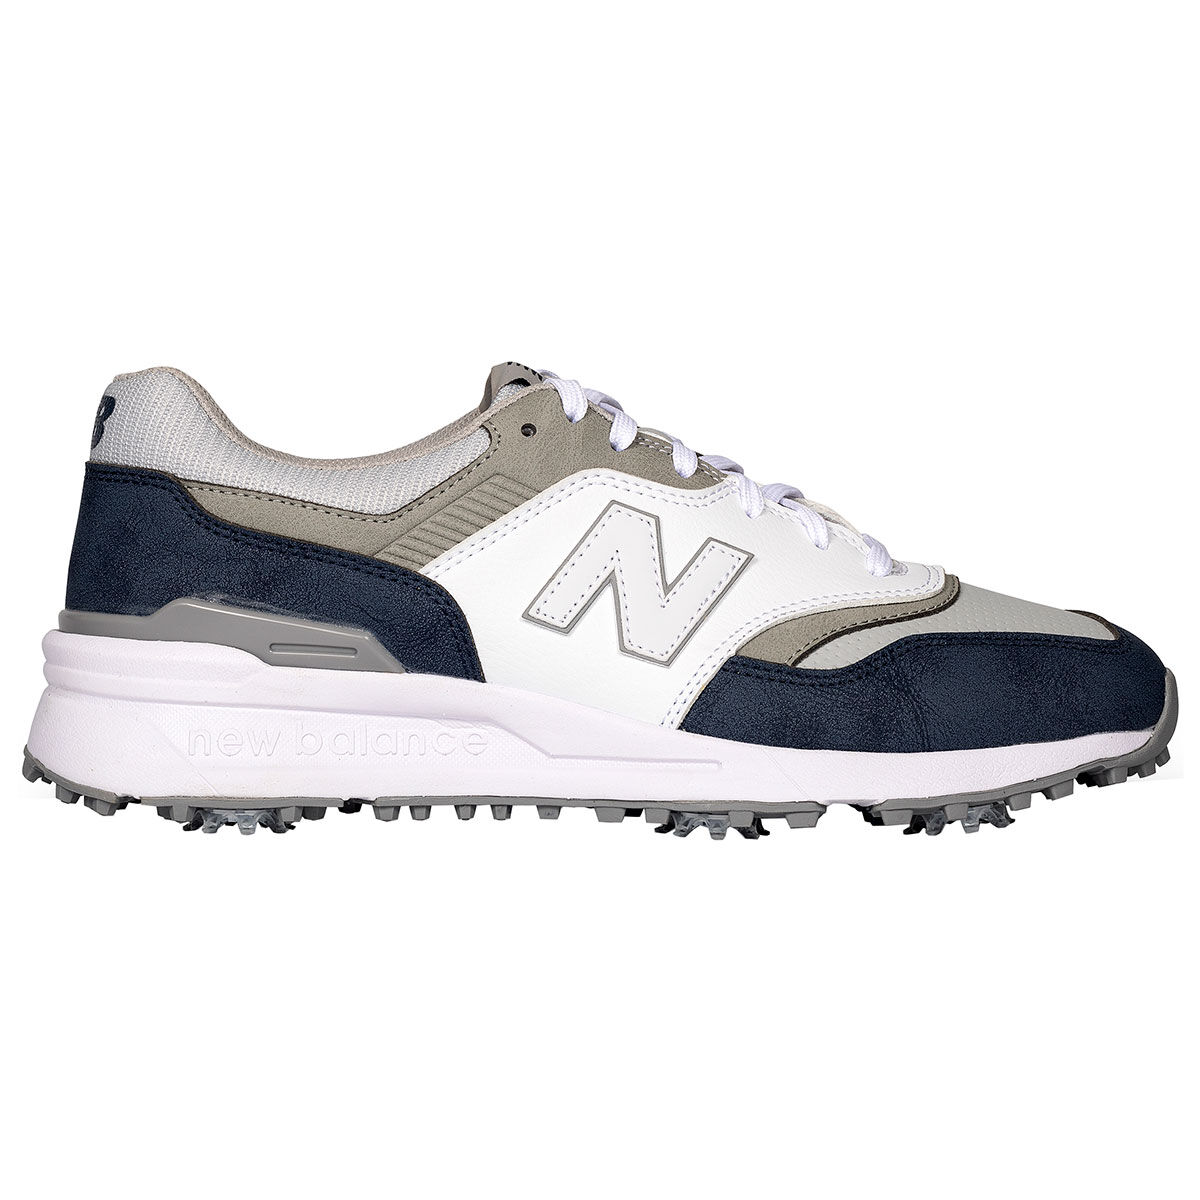 New Balance Men's 997 Waterproof Spiked Golf Shoes, Mens, Navy/white, 9 | American Golf von New Balance